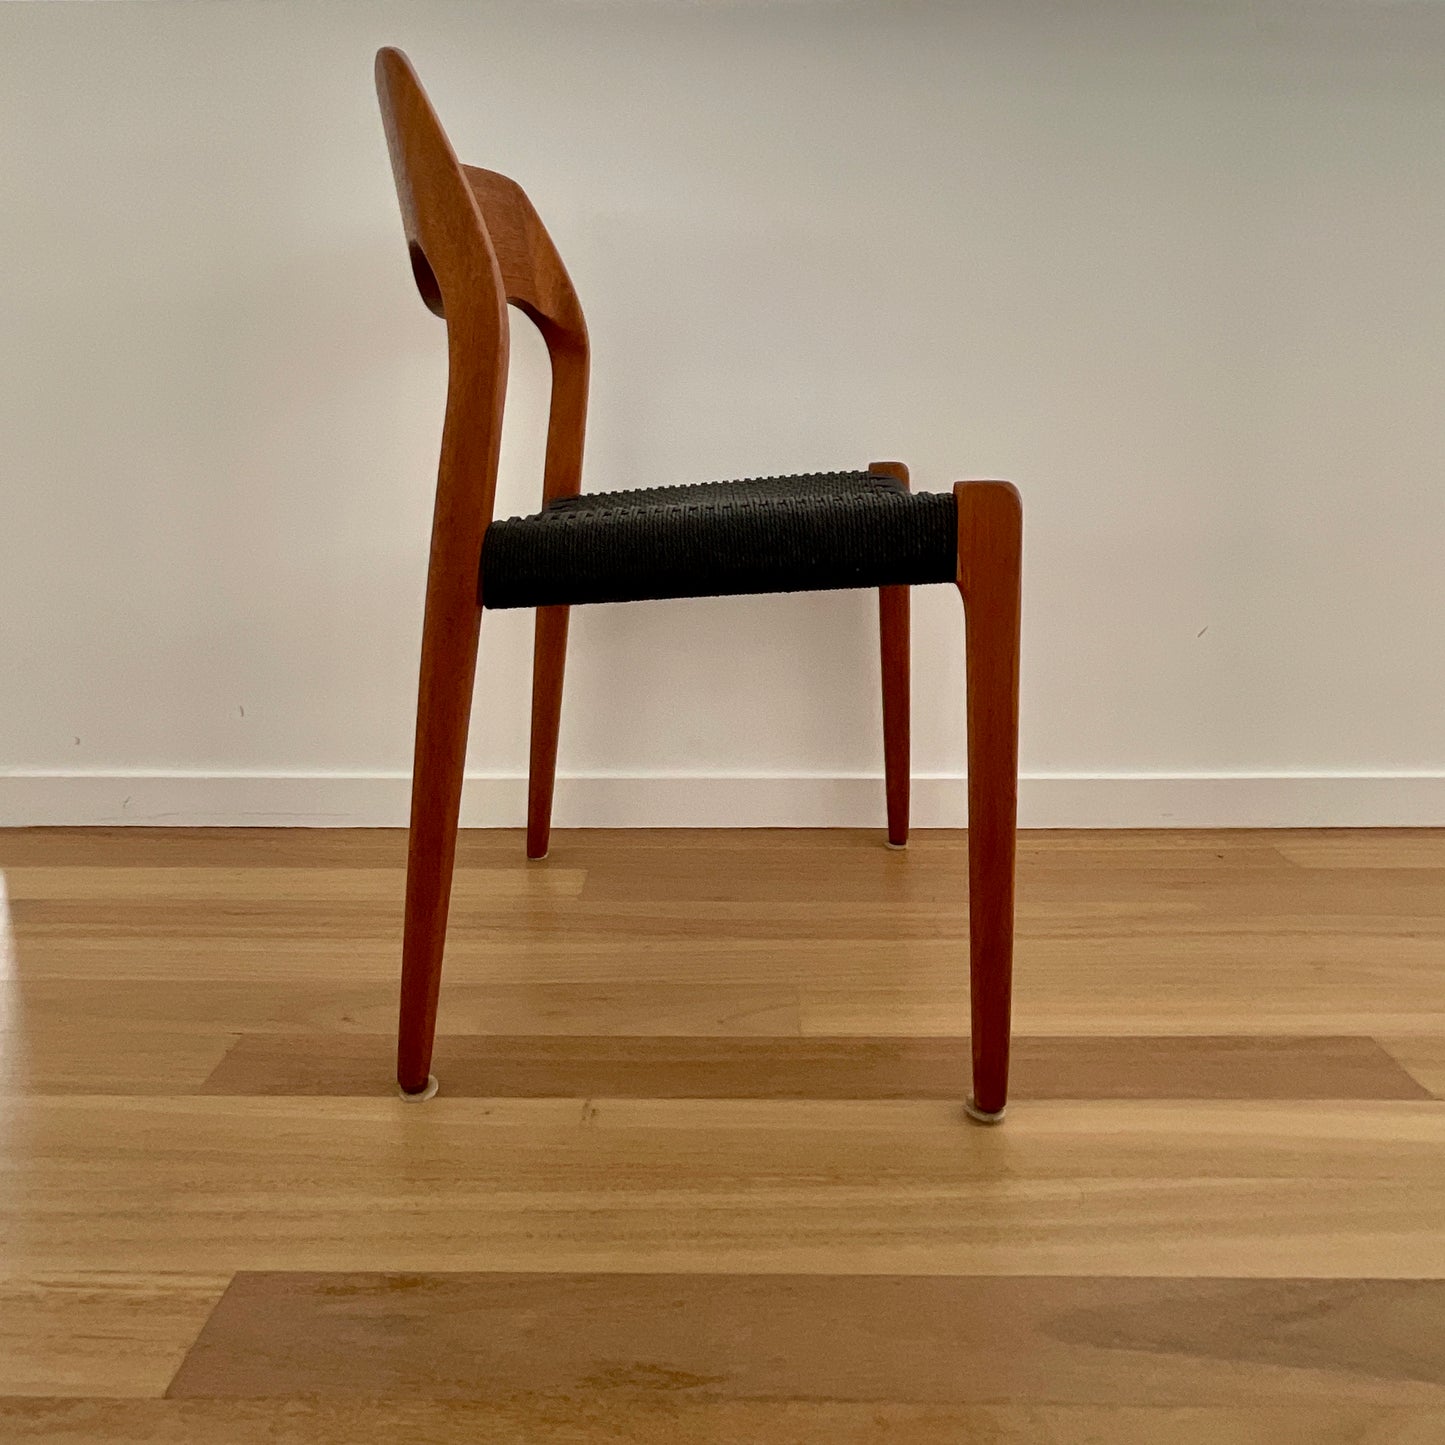 Set of FOUR Model #71 Chairs in Teak by Niels Møller for J.L Møller (2 sets available)